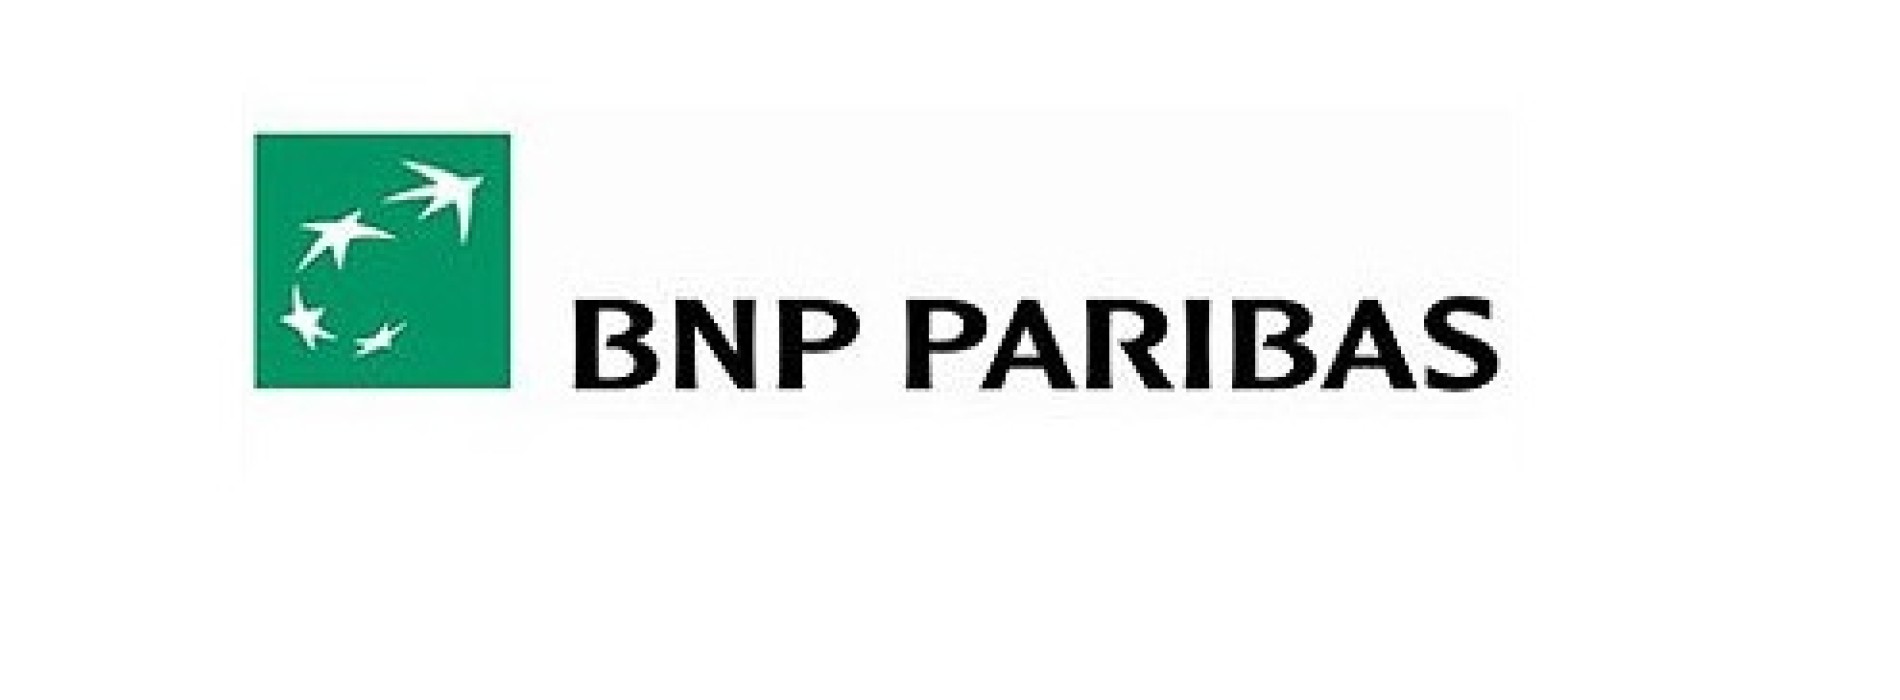 BNP Paribas Bank Polska kontynuuje współpracęz MSLGROUP